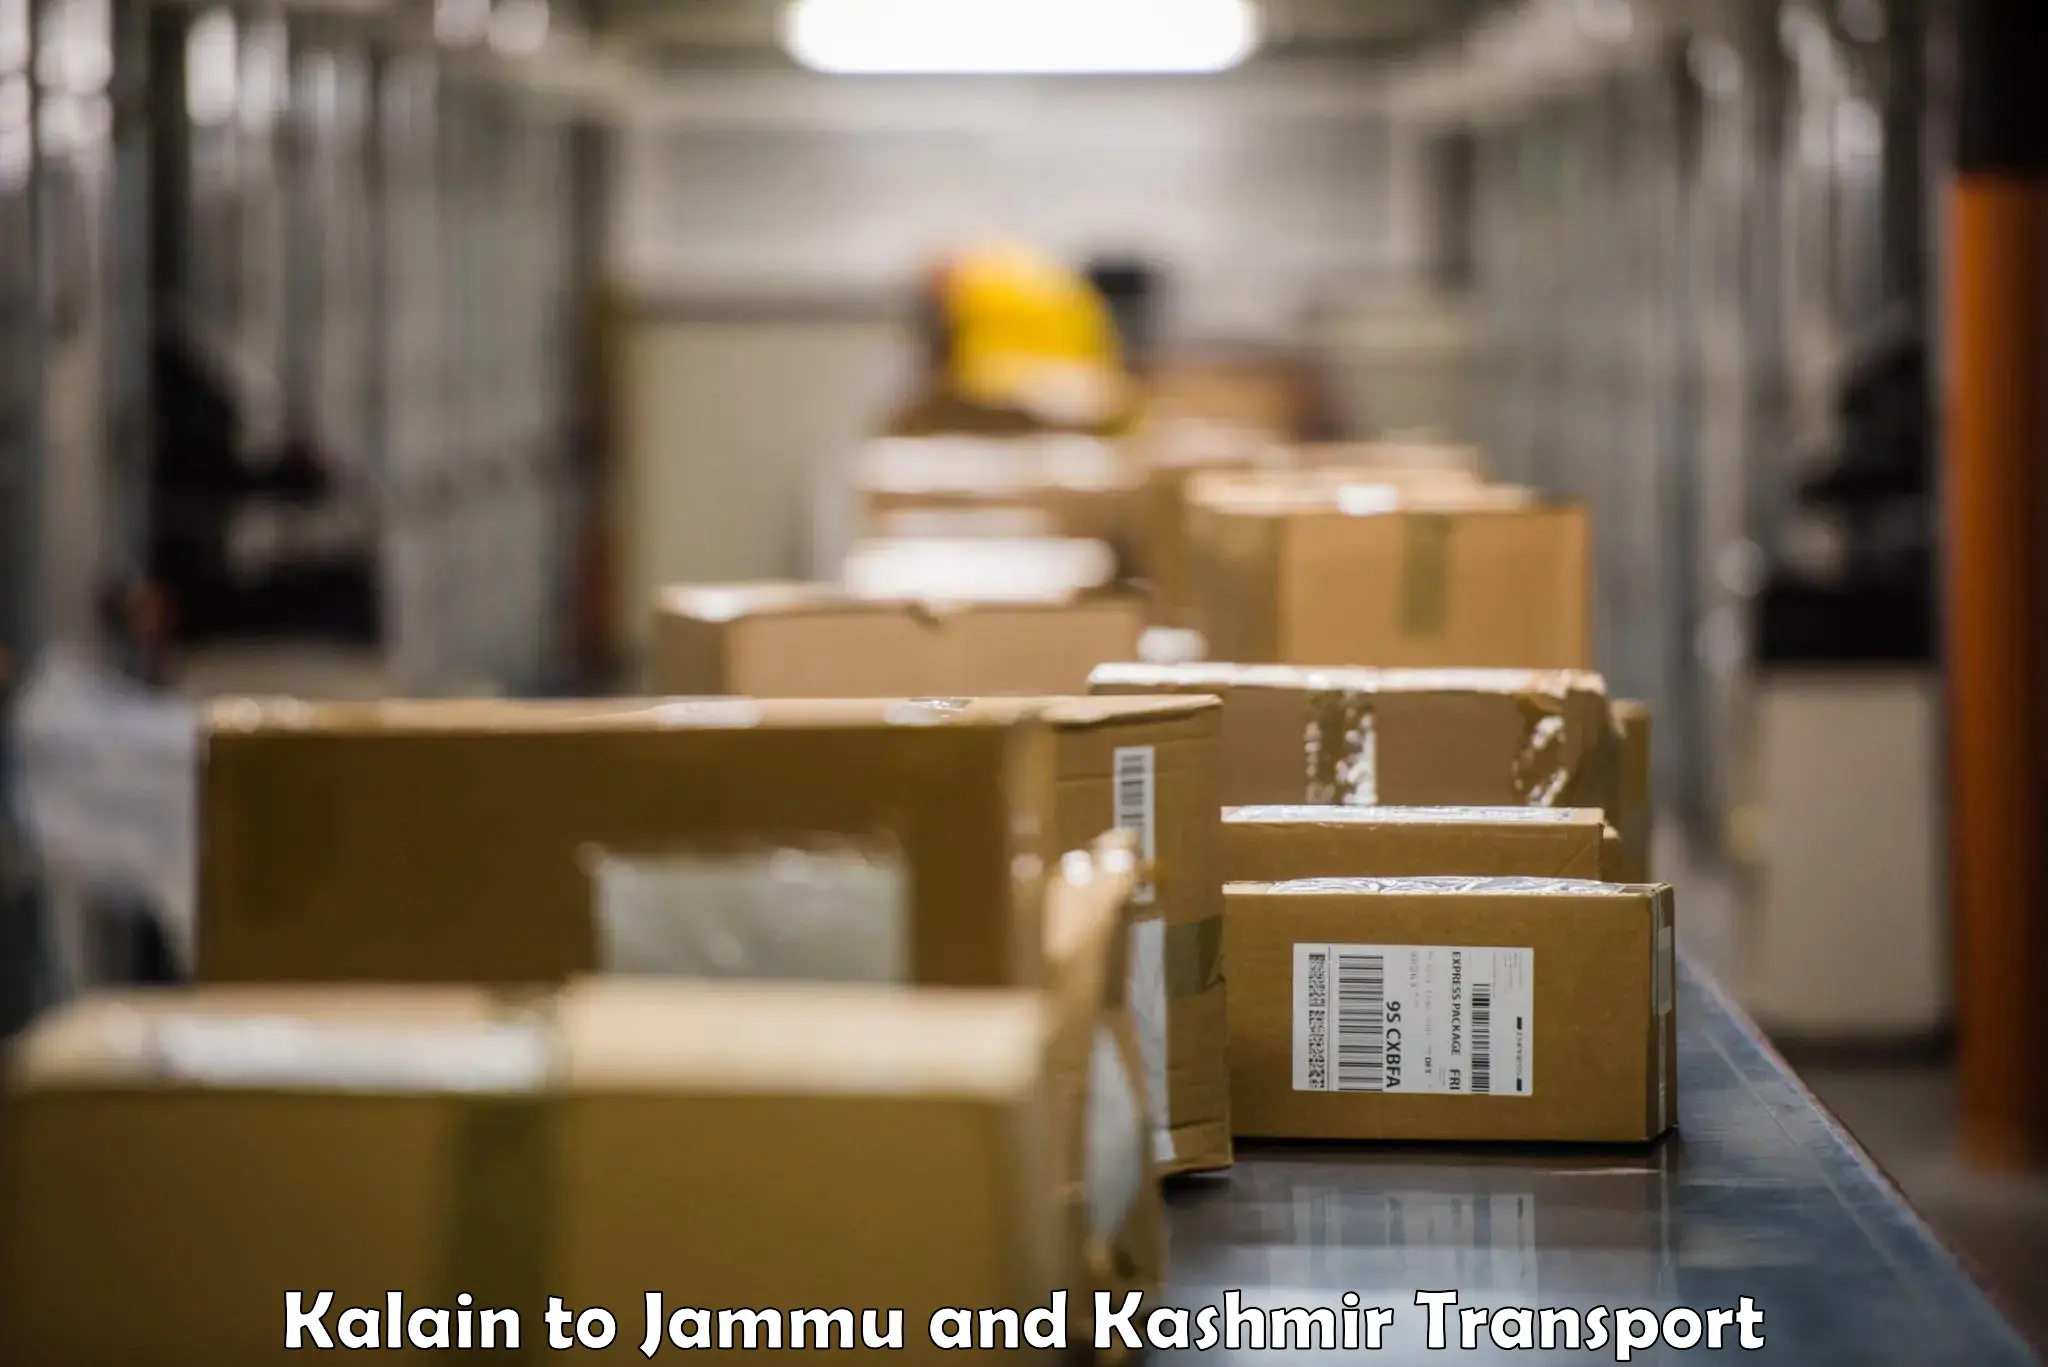 Truck transport companies in India Kalain to Kargil